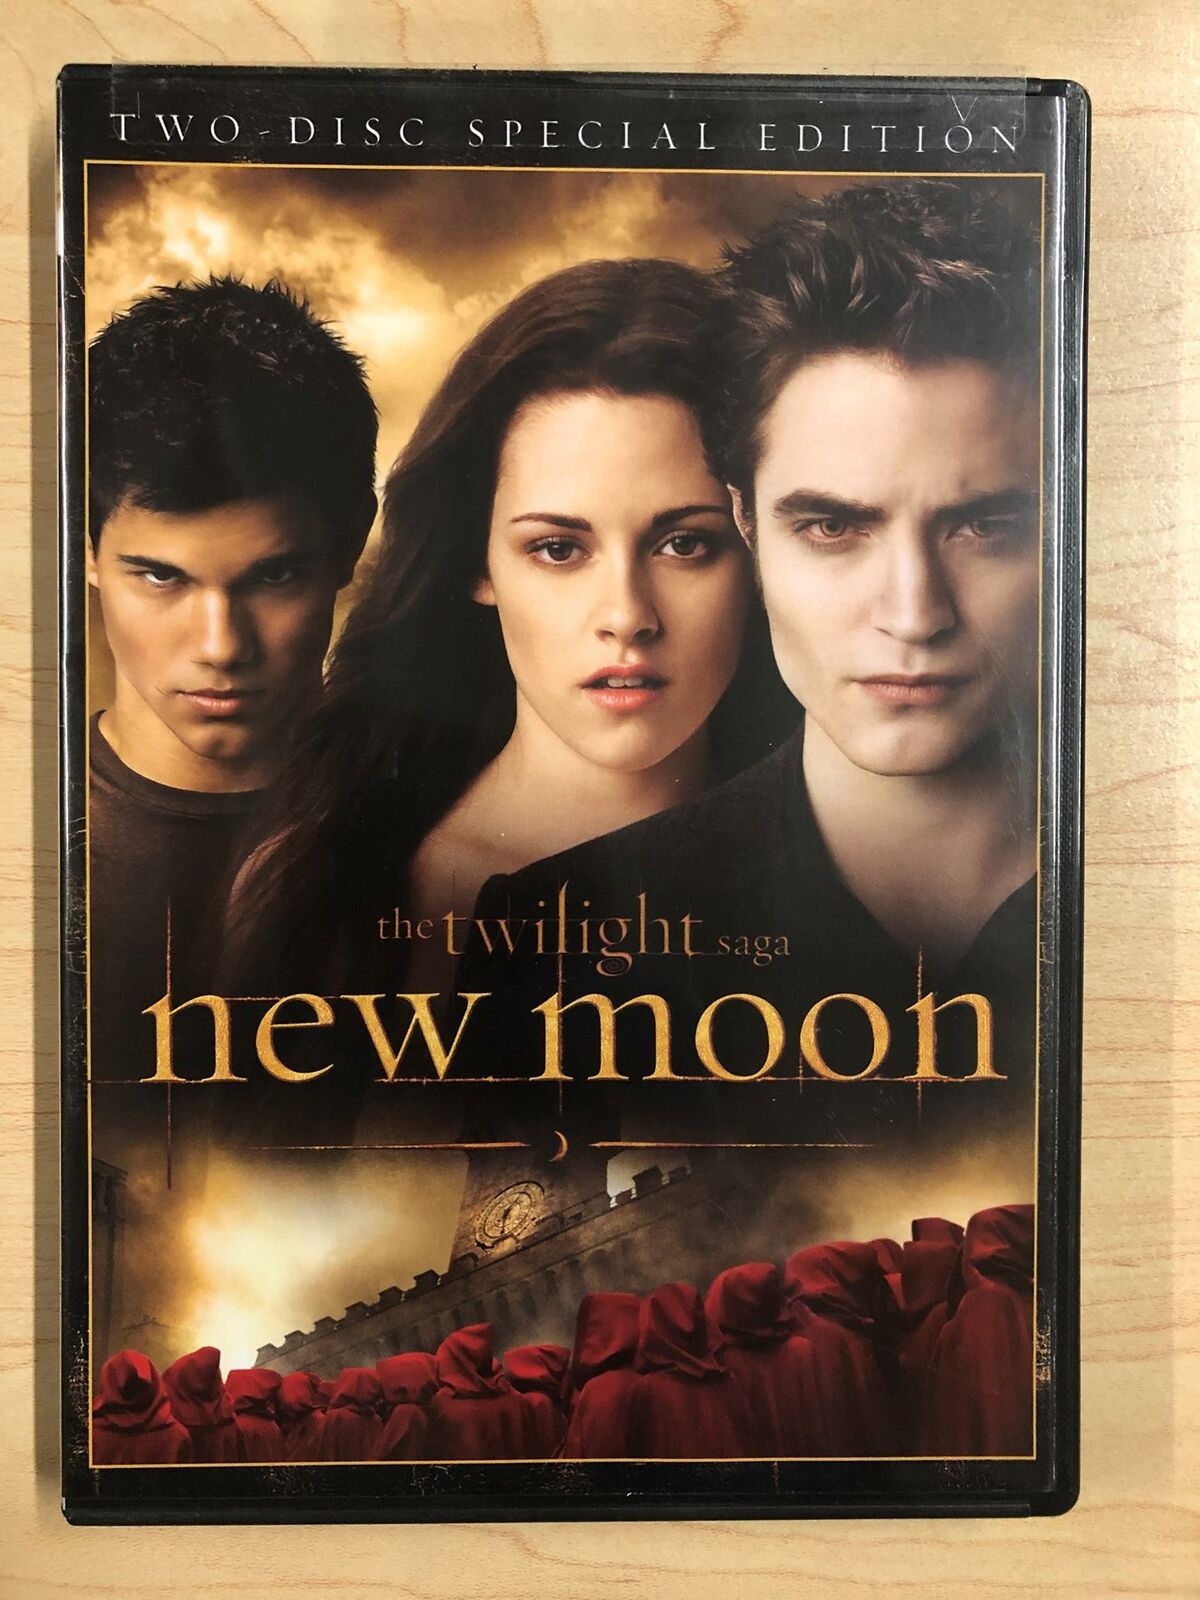 The Twilight Saga - New Moon (DVD, 2009, 2-Disc Special Edition) - J0917